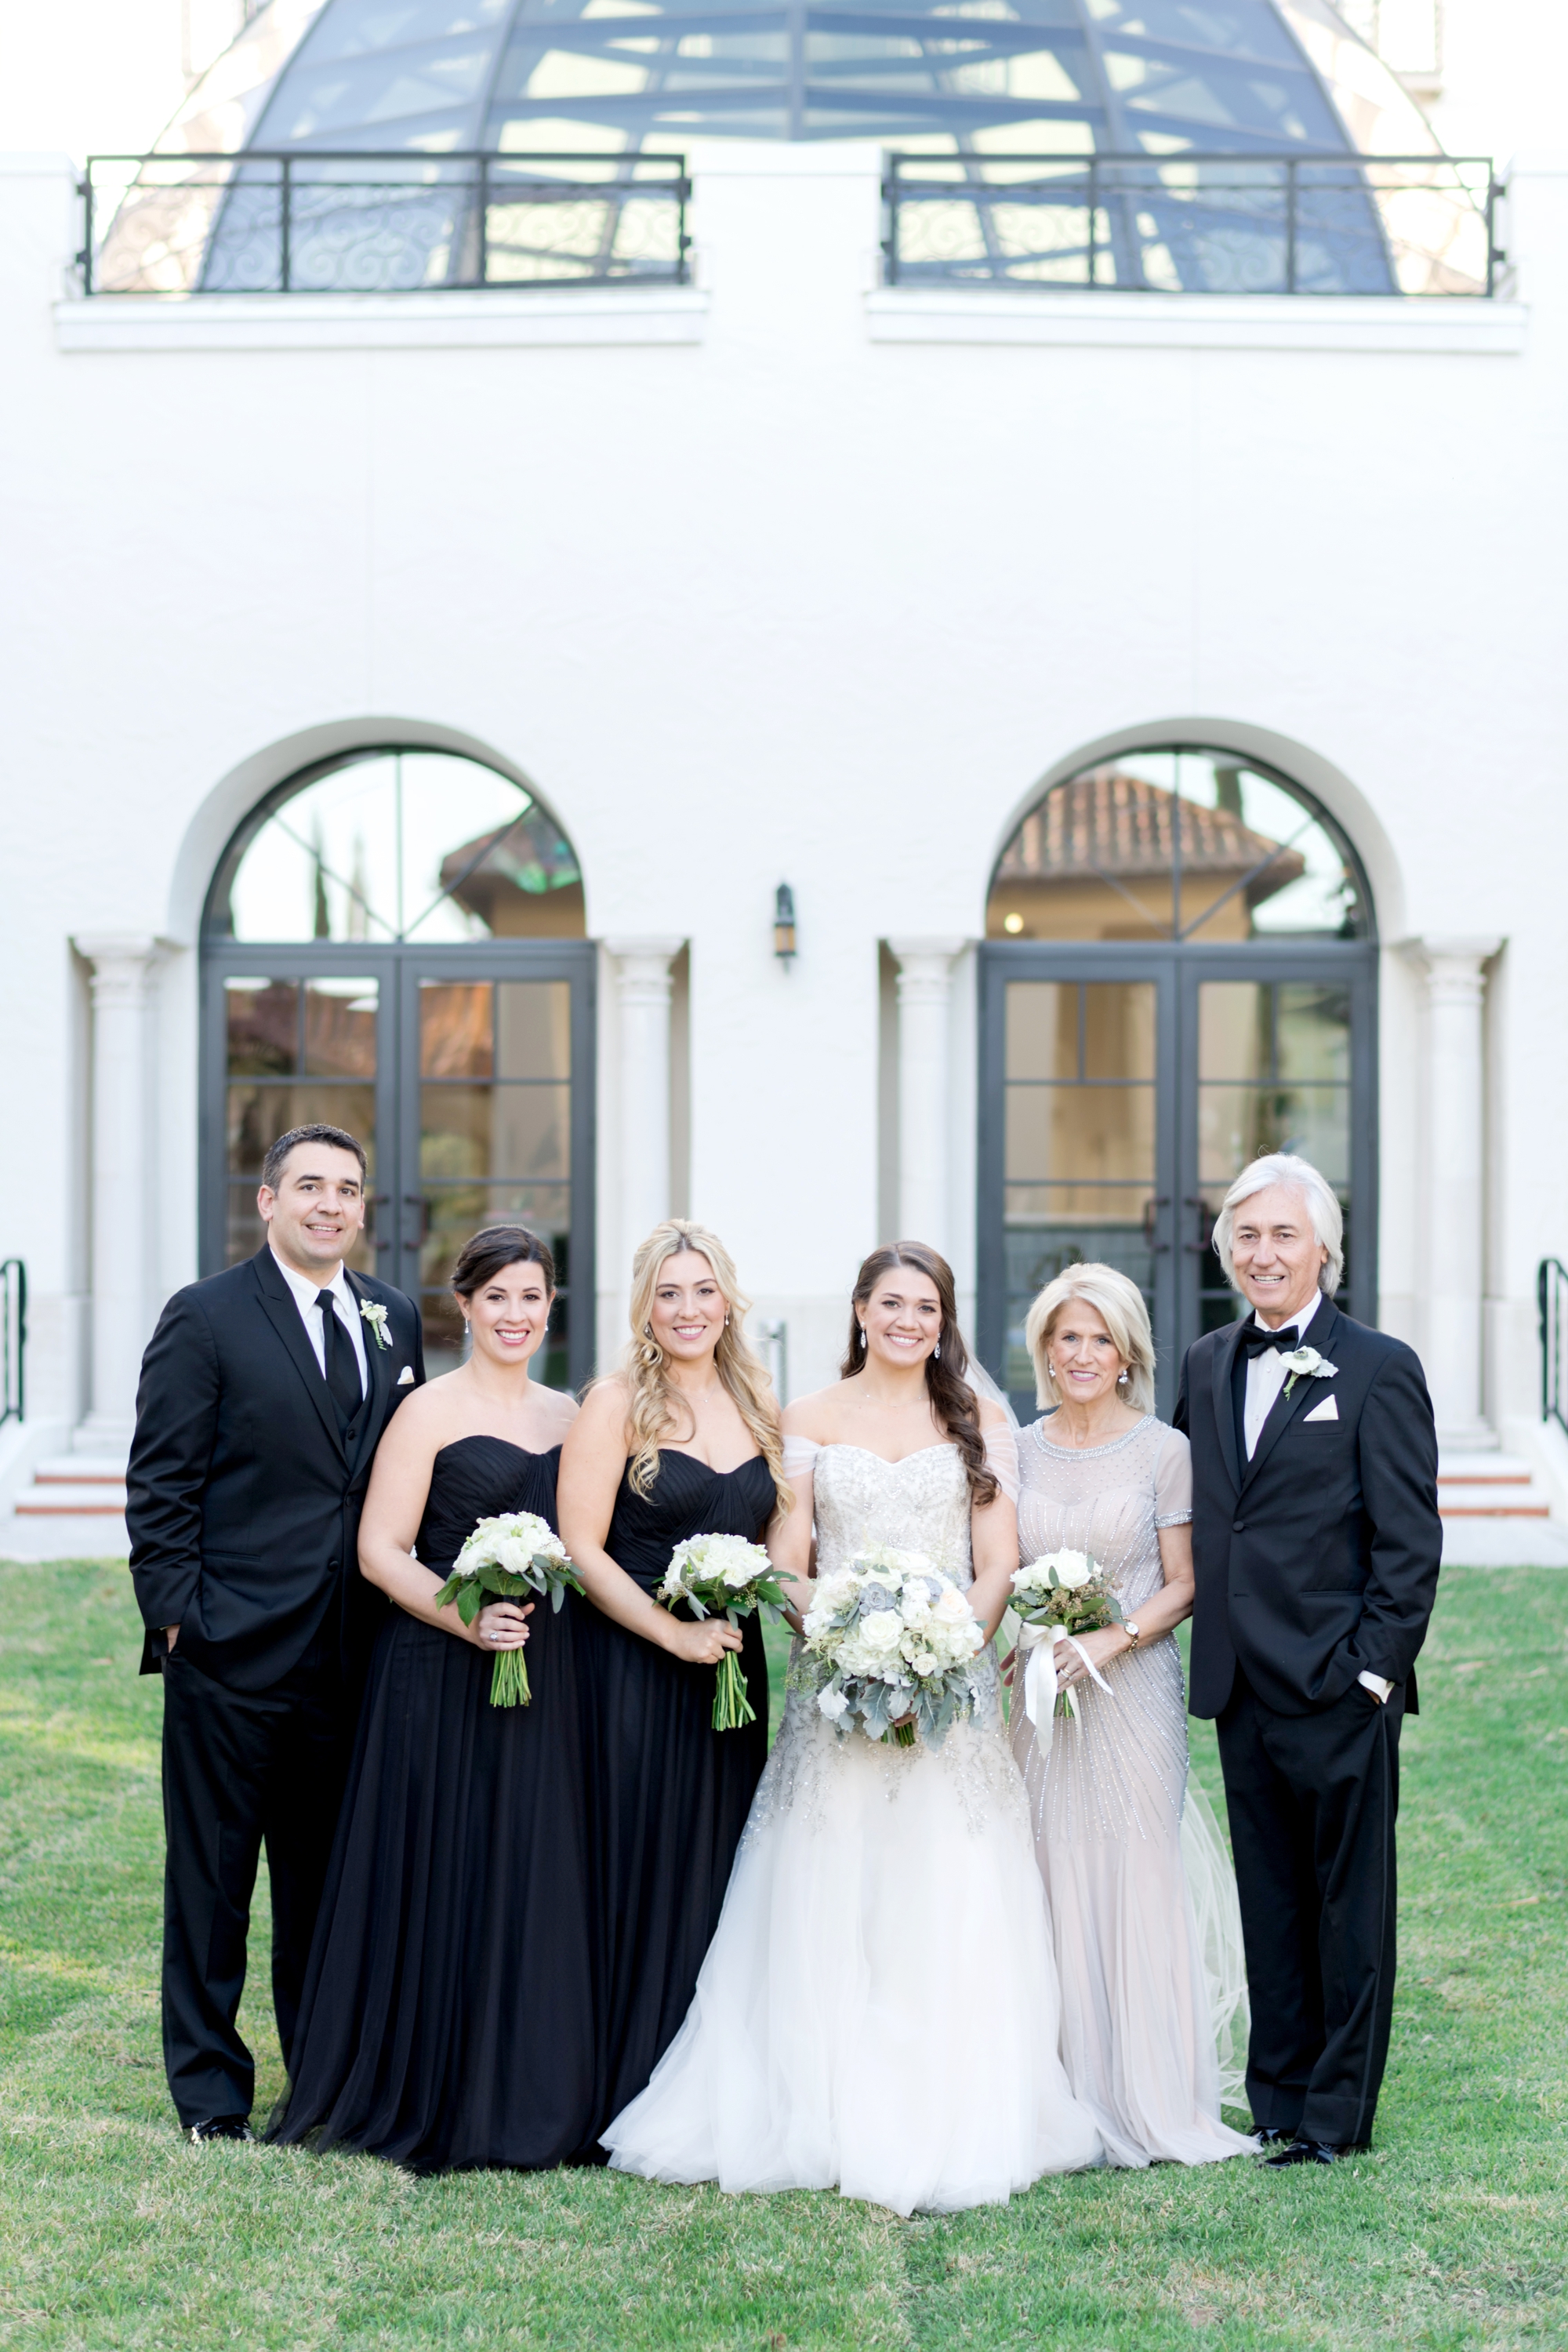 family formal photograph at wedding